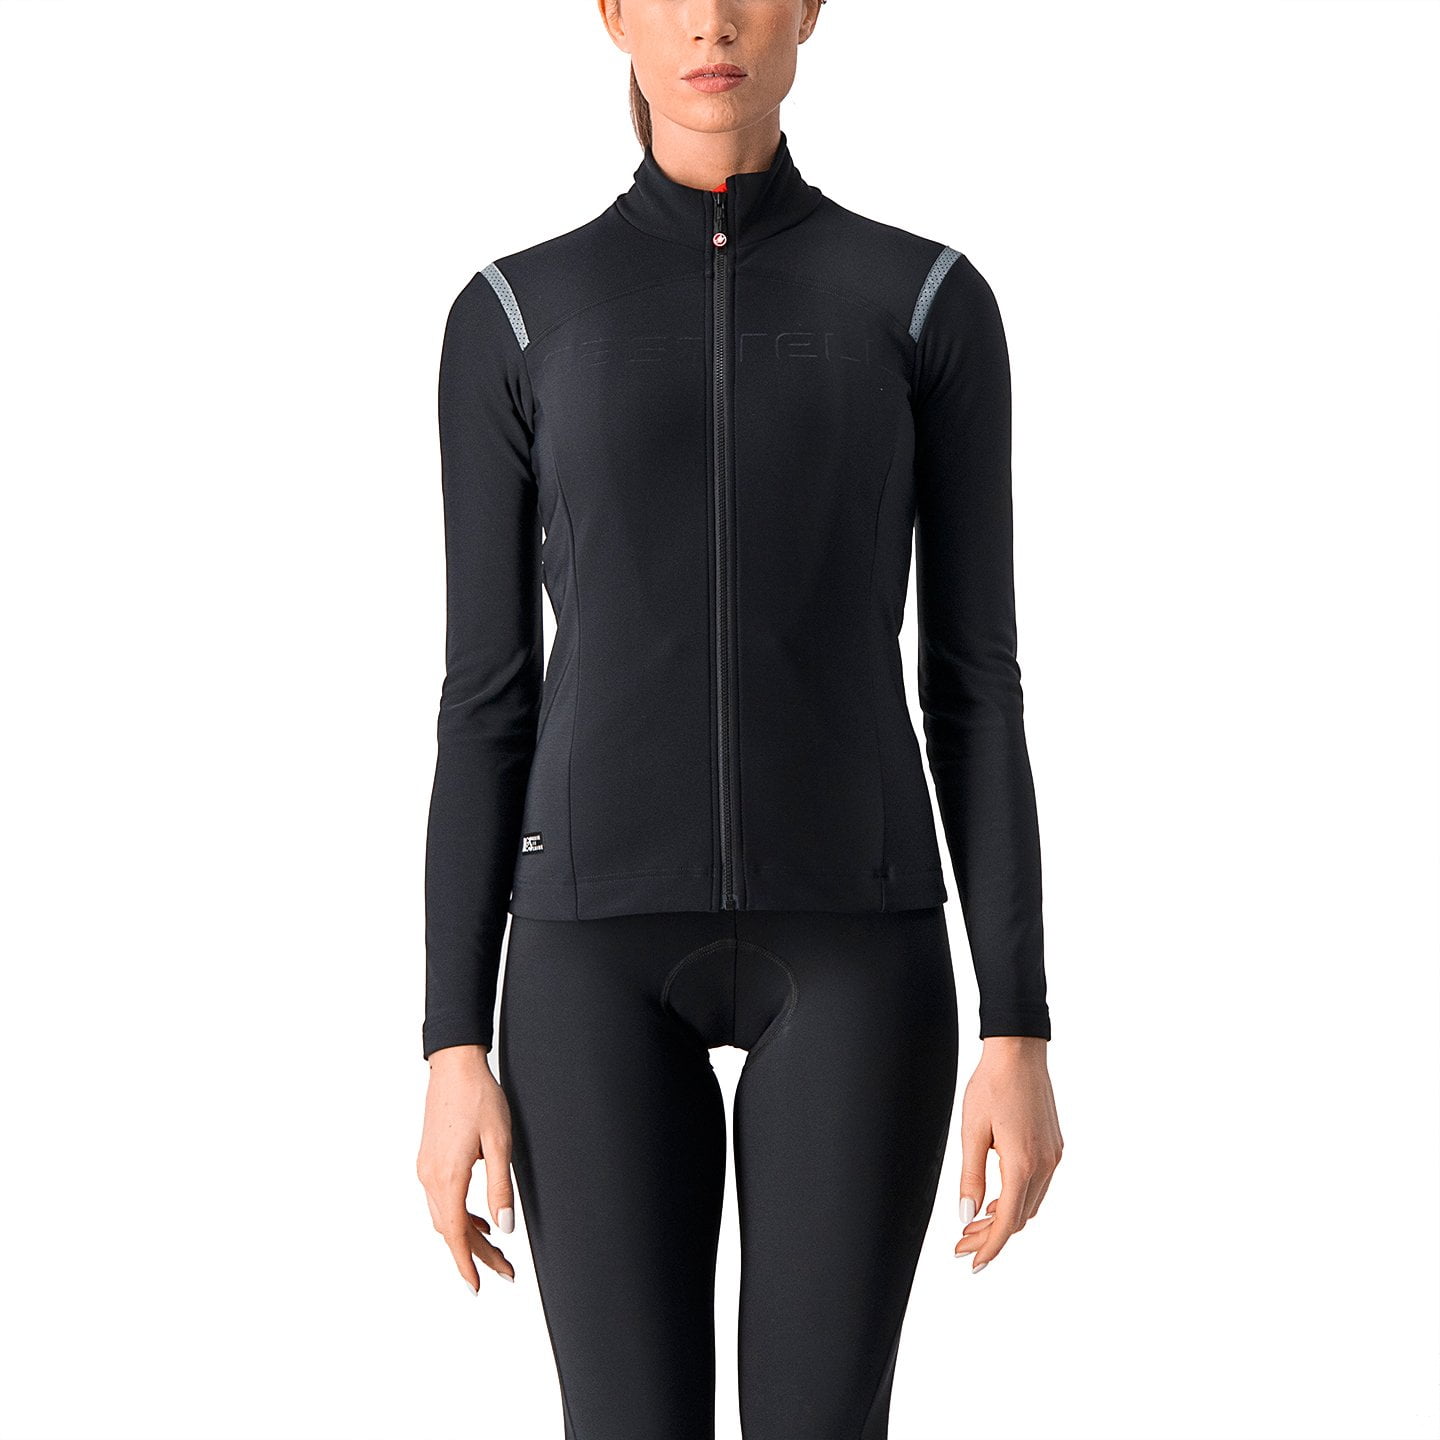 CASTELLI Tutto Nano RoS Women’s Light Jacket Light Jacket, size S, Cycle jacket, Cycle clothing